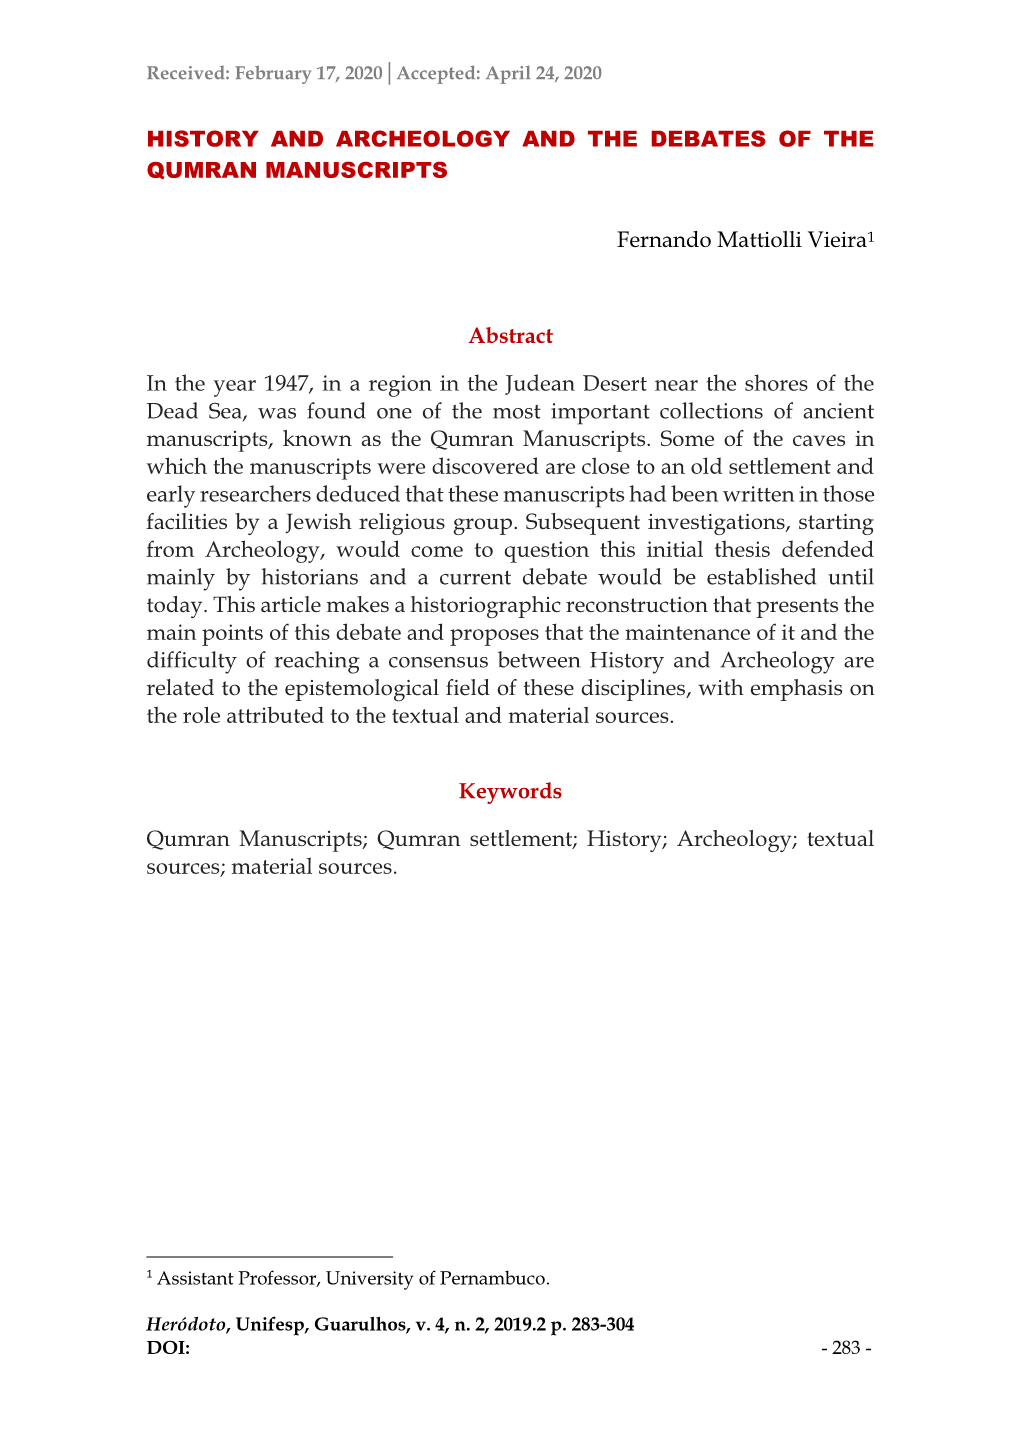 History and Archeology and the Debates of the Qumran Manuscripts